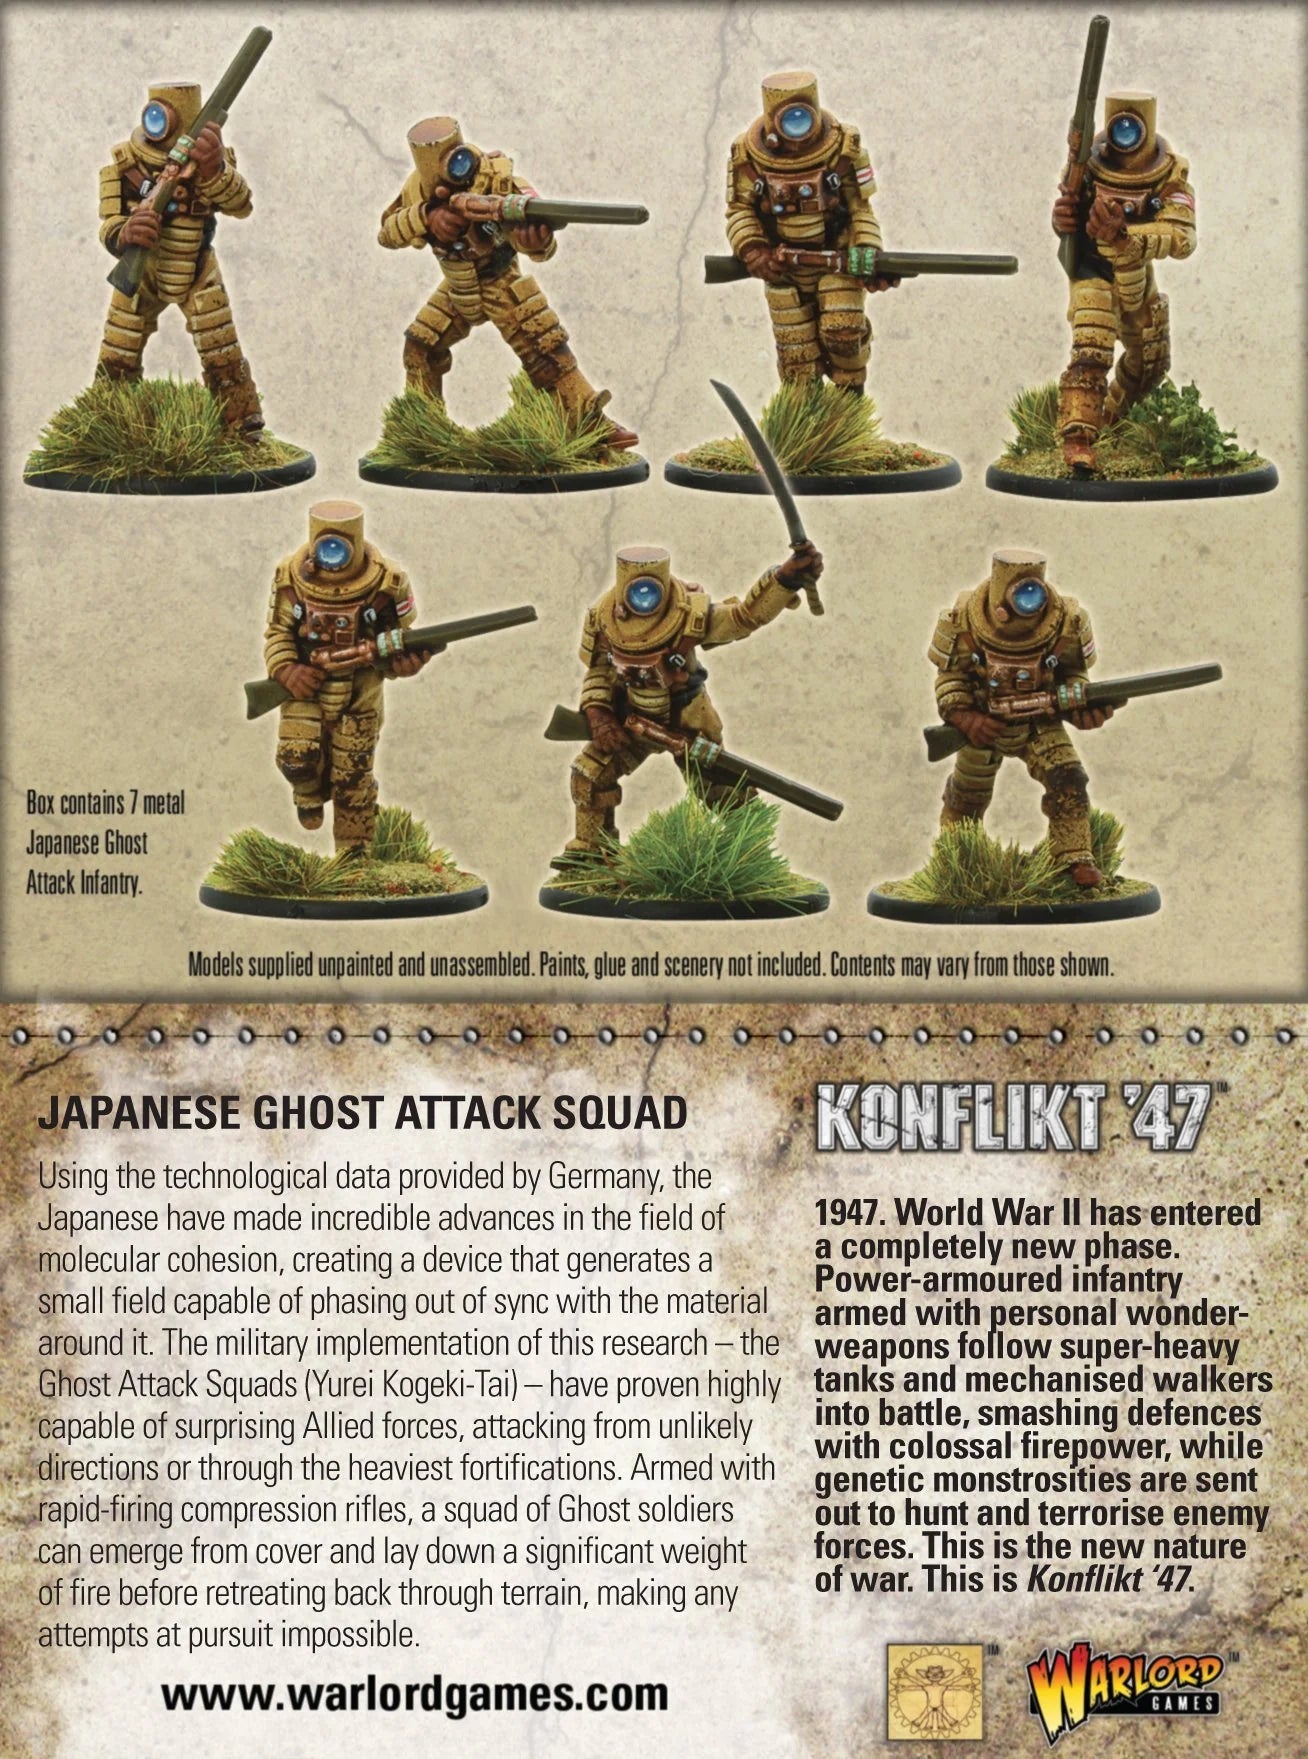 Konflikt ‘47 Japanese Ghost Attack Squad